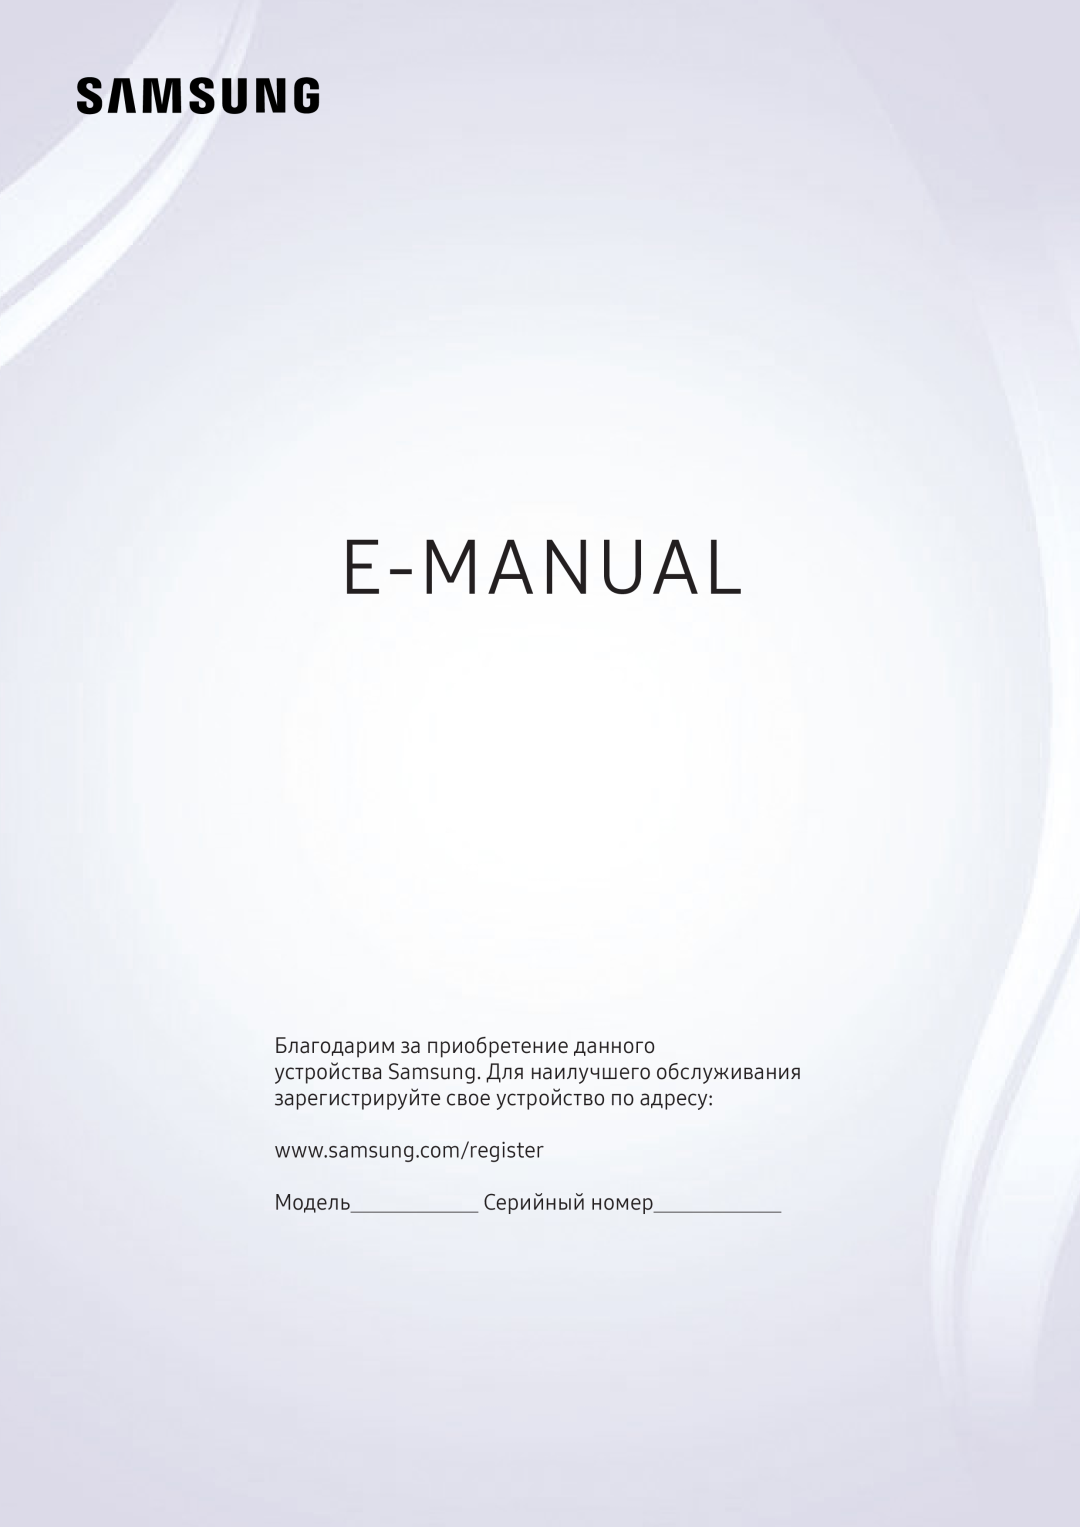 Samsung UE49KS9002TXXH, UE50KU6000WXXH manual E-Manual, Благодарим за приобретение данного, Модель, Серийный номер 